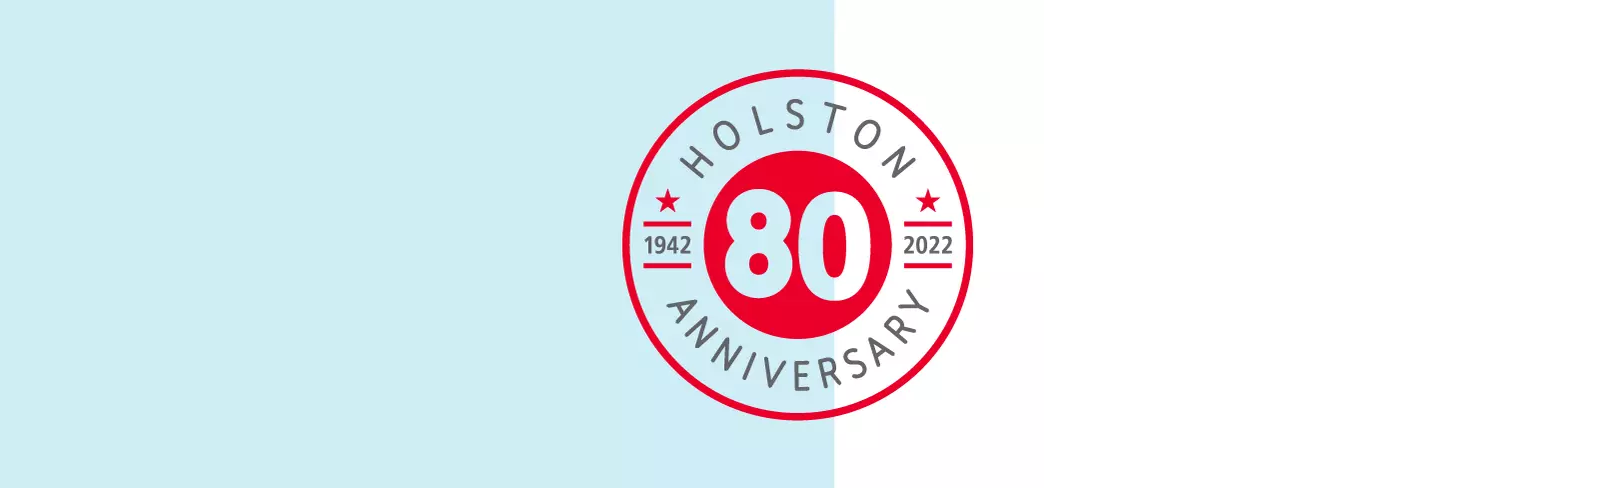 Holston 80th anniversary banner 